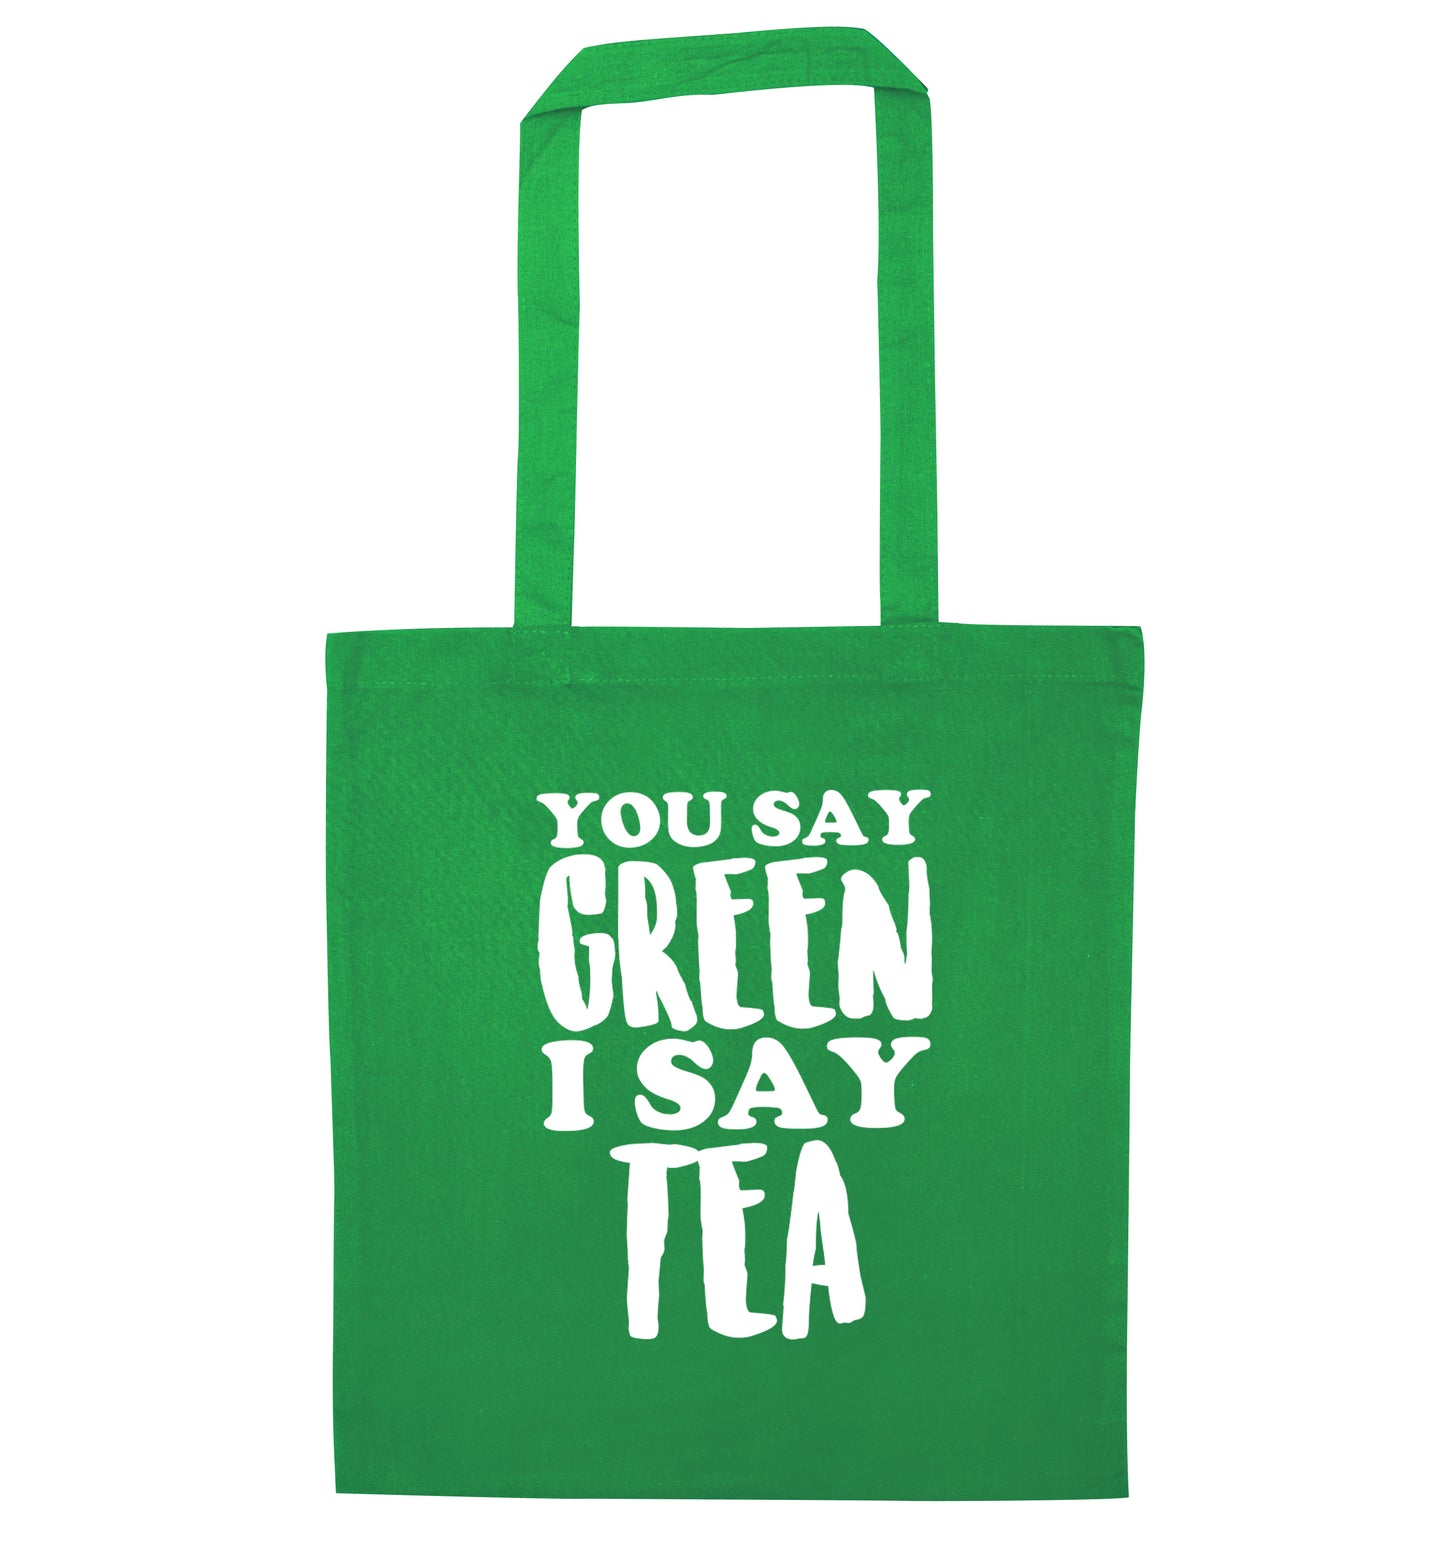 You say green I say tea! green tote bag